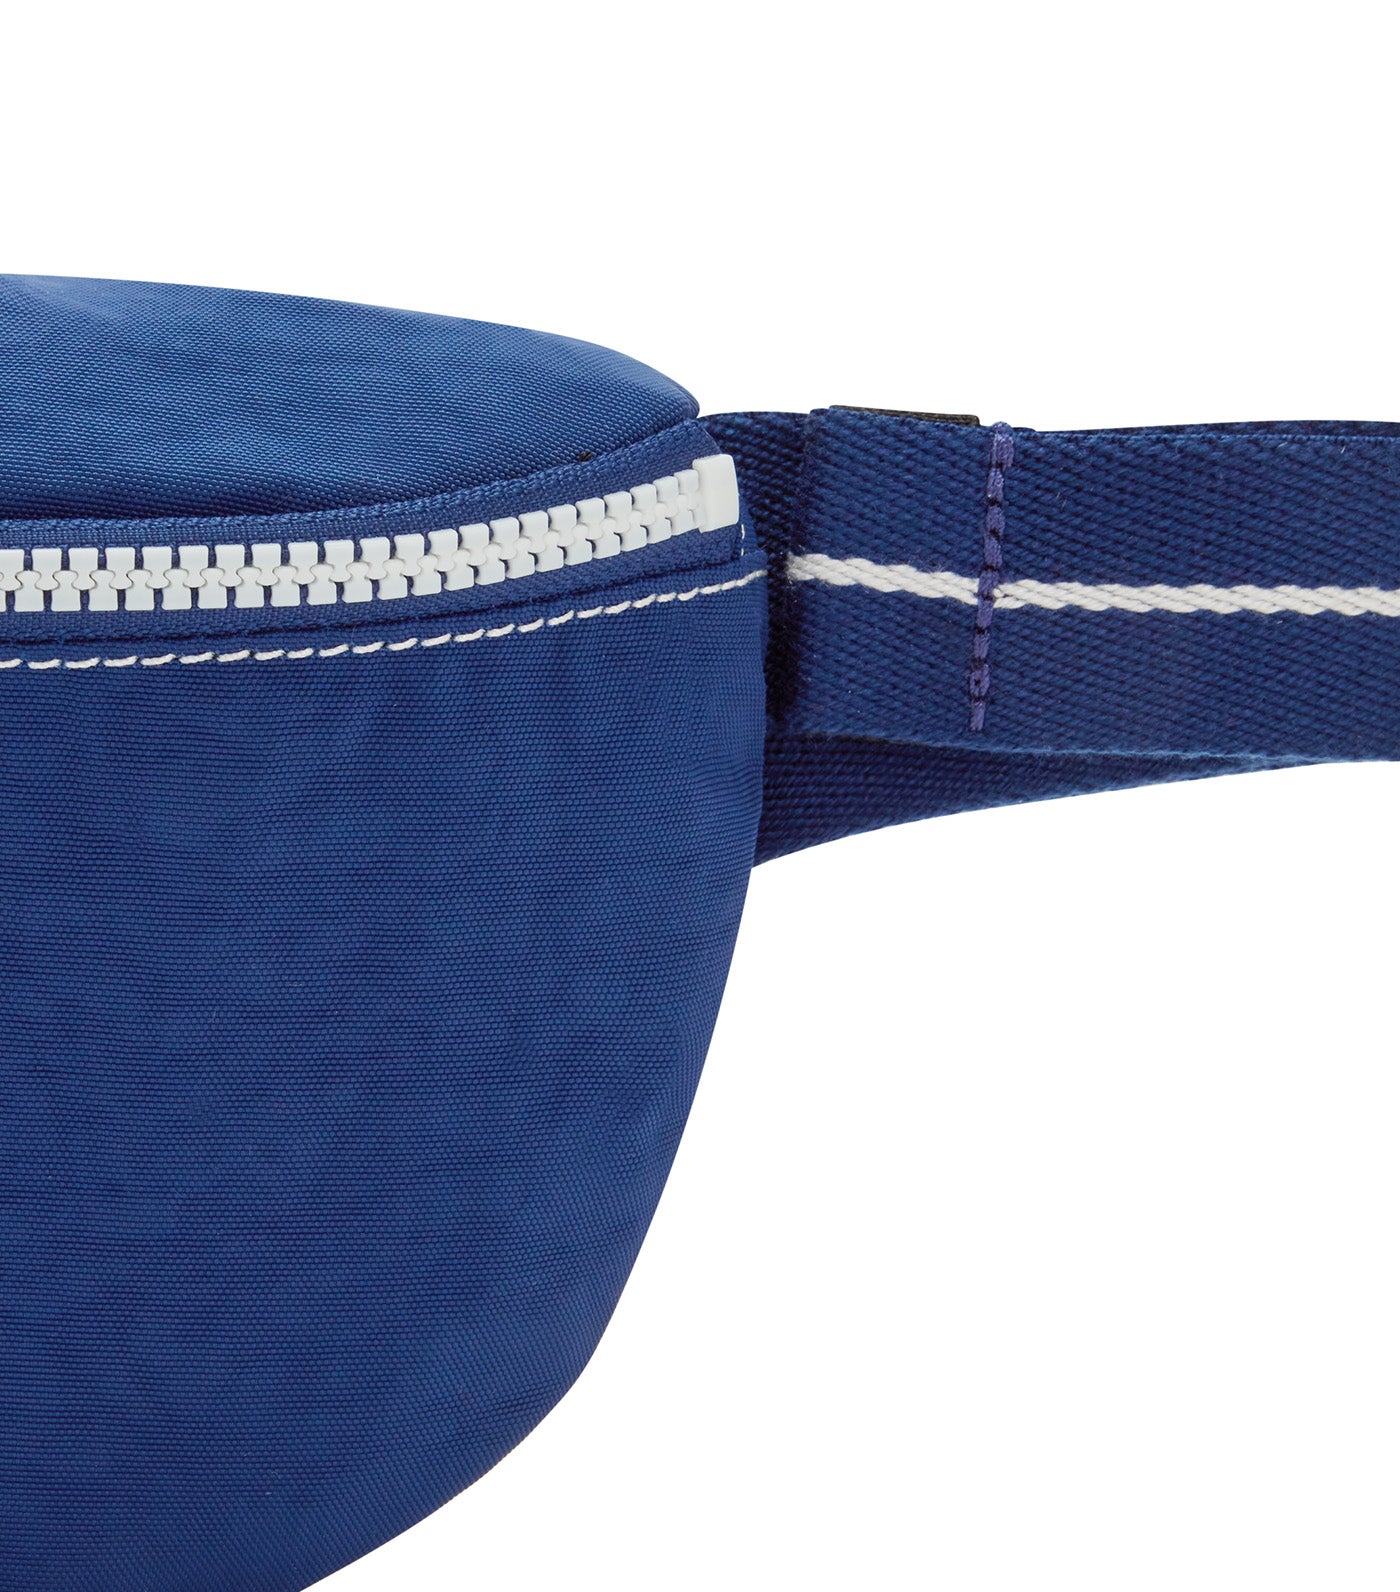 New Fresh Belt Bag Admiral Blue C